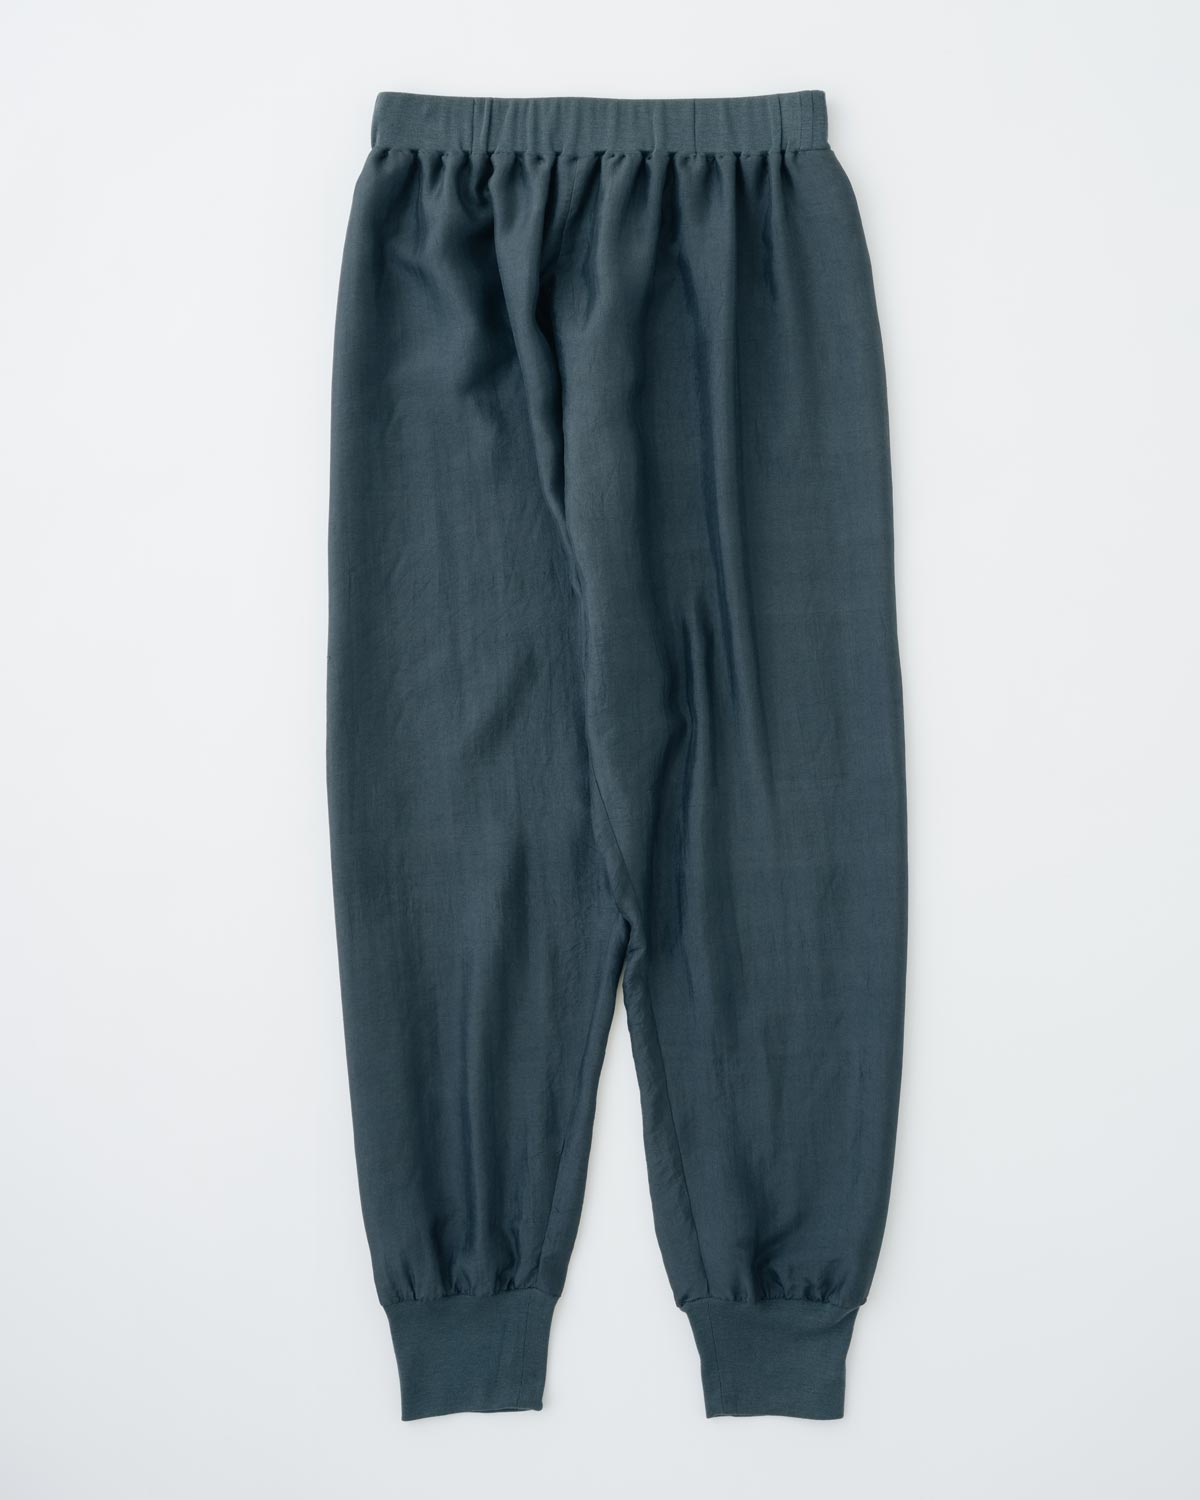 Silk Rib Pants Charcoal gray